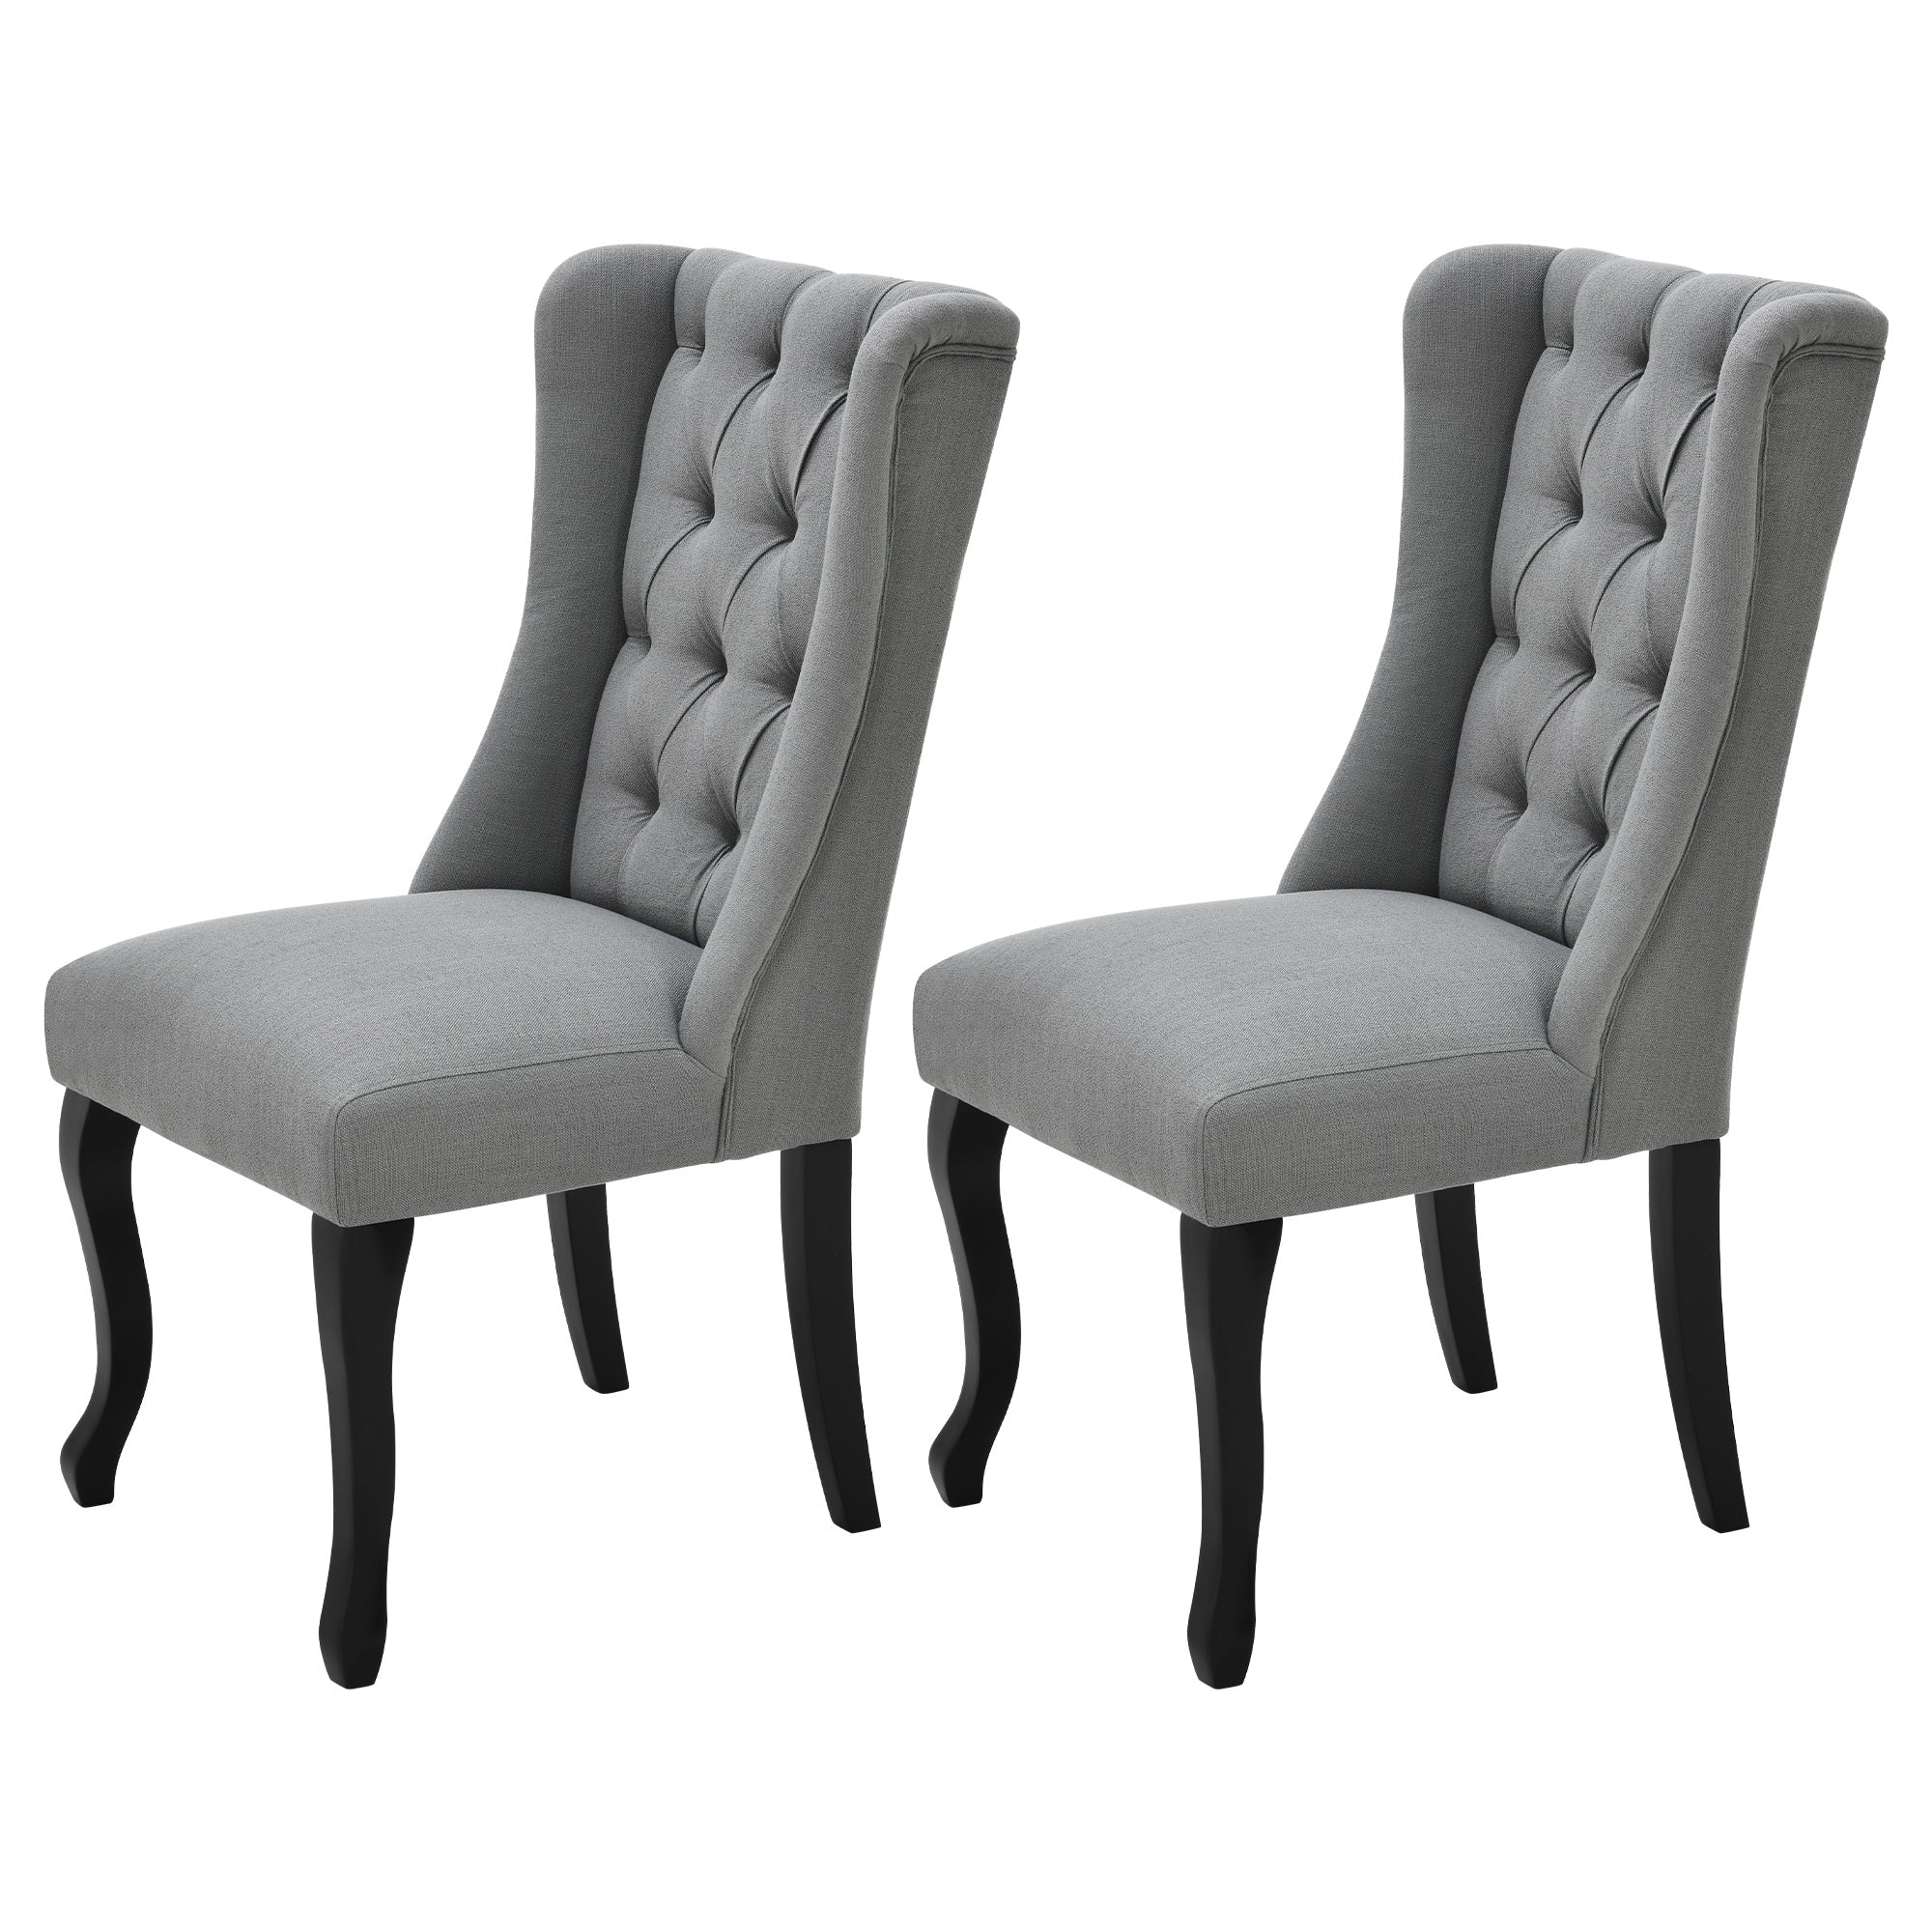 Émilie Upholstered Dining Chairs Set of 2, Light Grey/Dark Grey/Blue/Beige